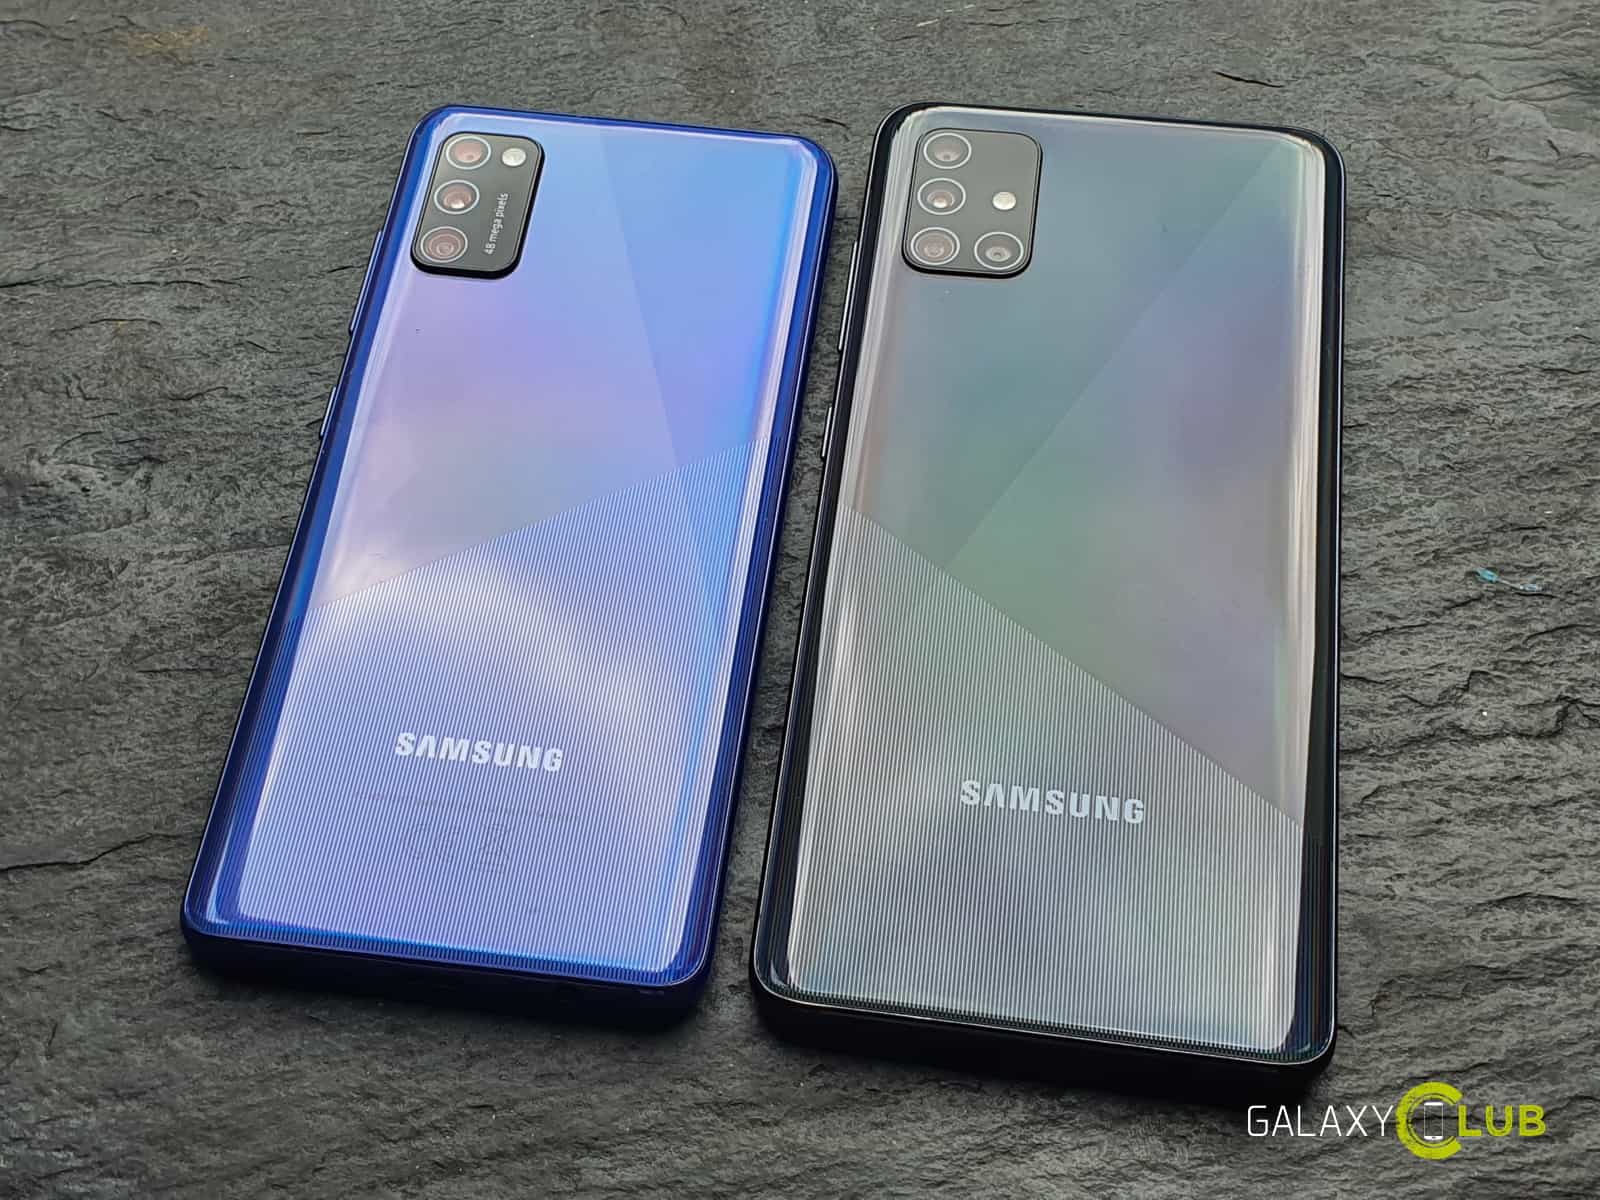 Spin waterbestendig privaat Vergelijking: Samsung Galaxy A41 versus Galaxy A51, de verschillen